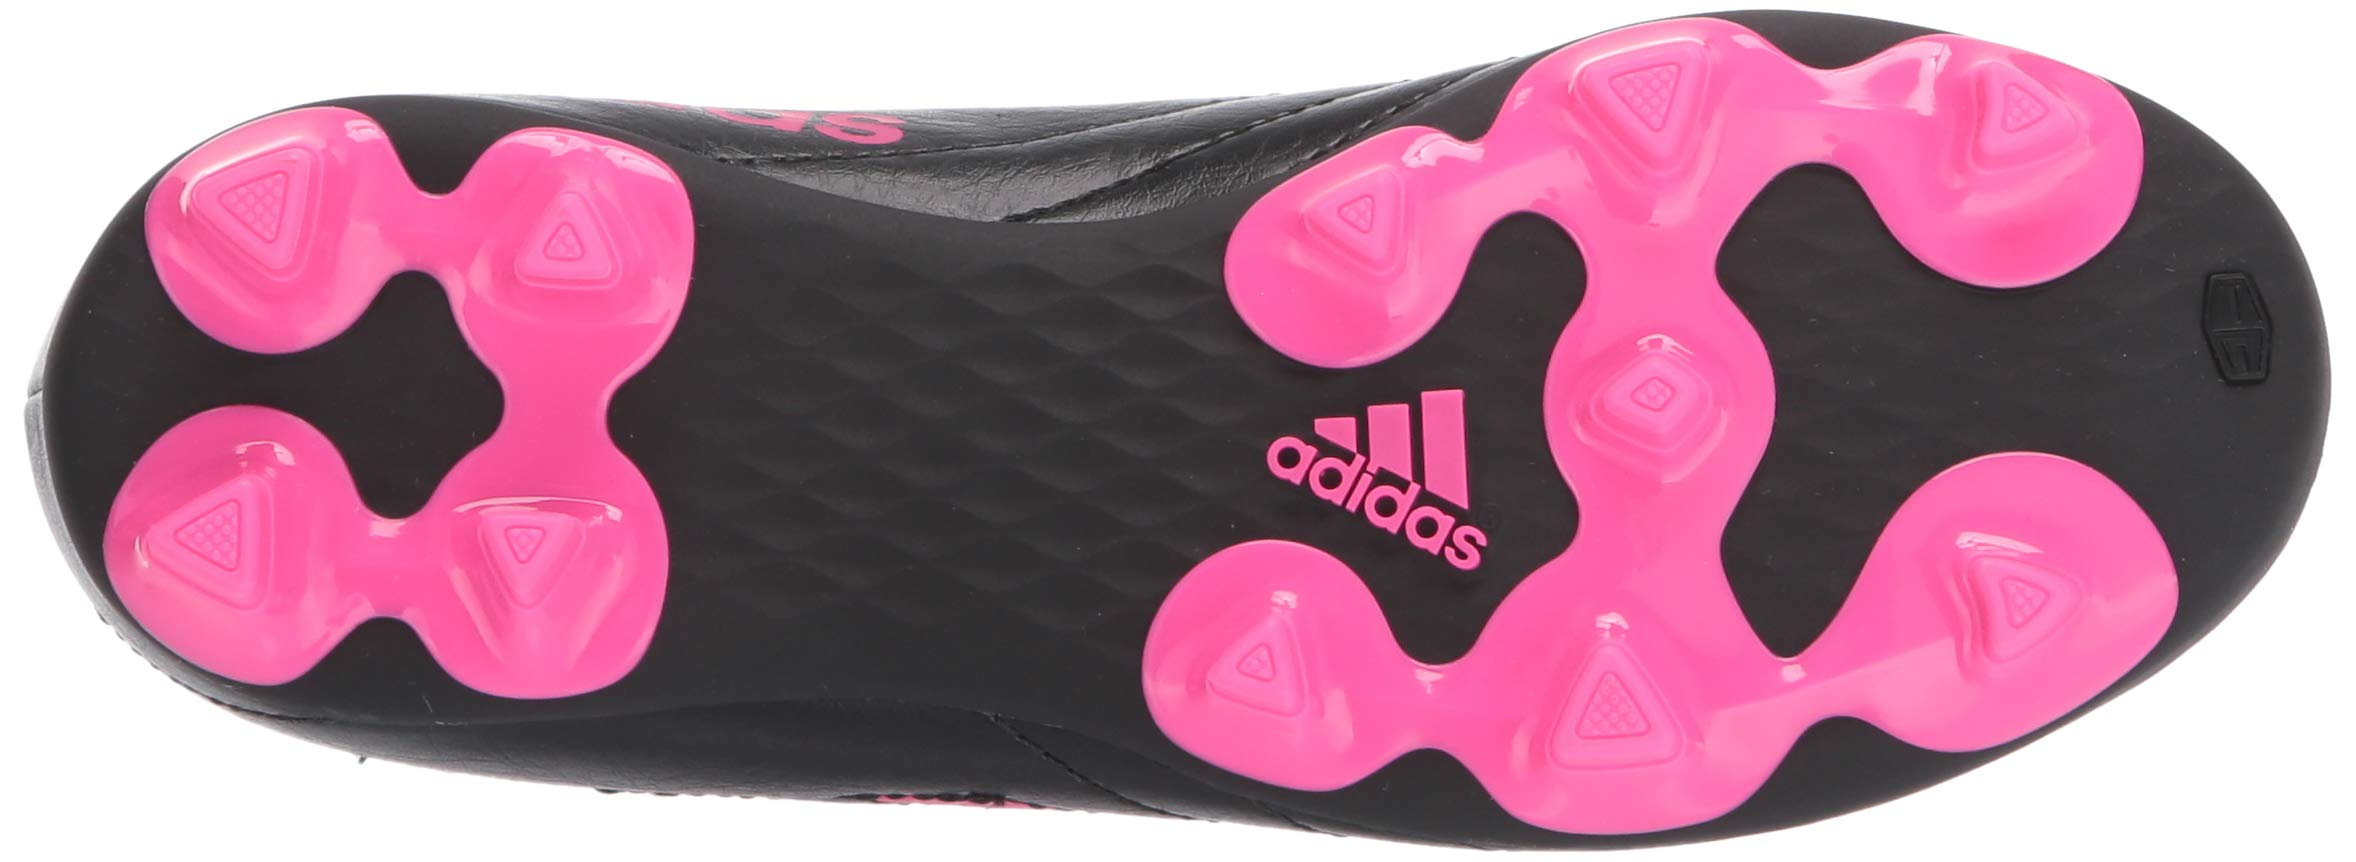 adidas Unisex-Child Goletto VII Firm Ground Cleats Football Shoe